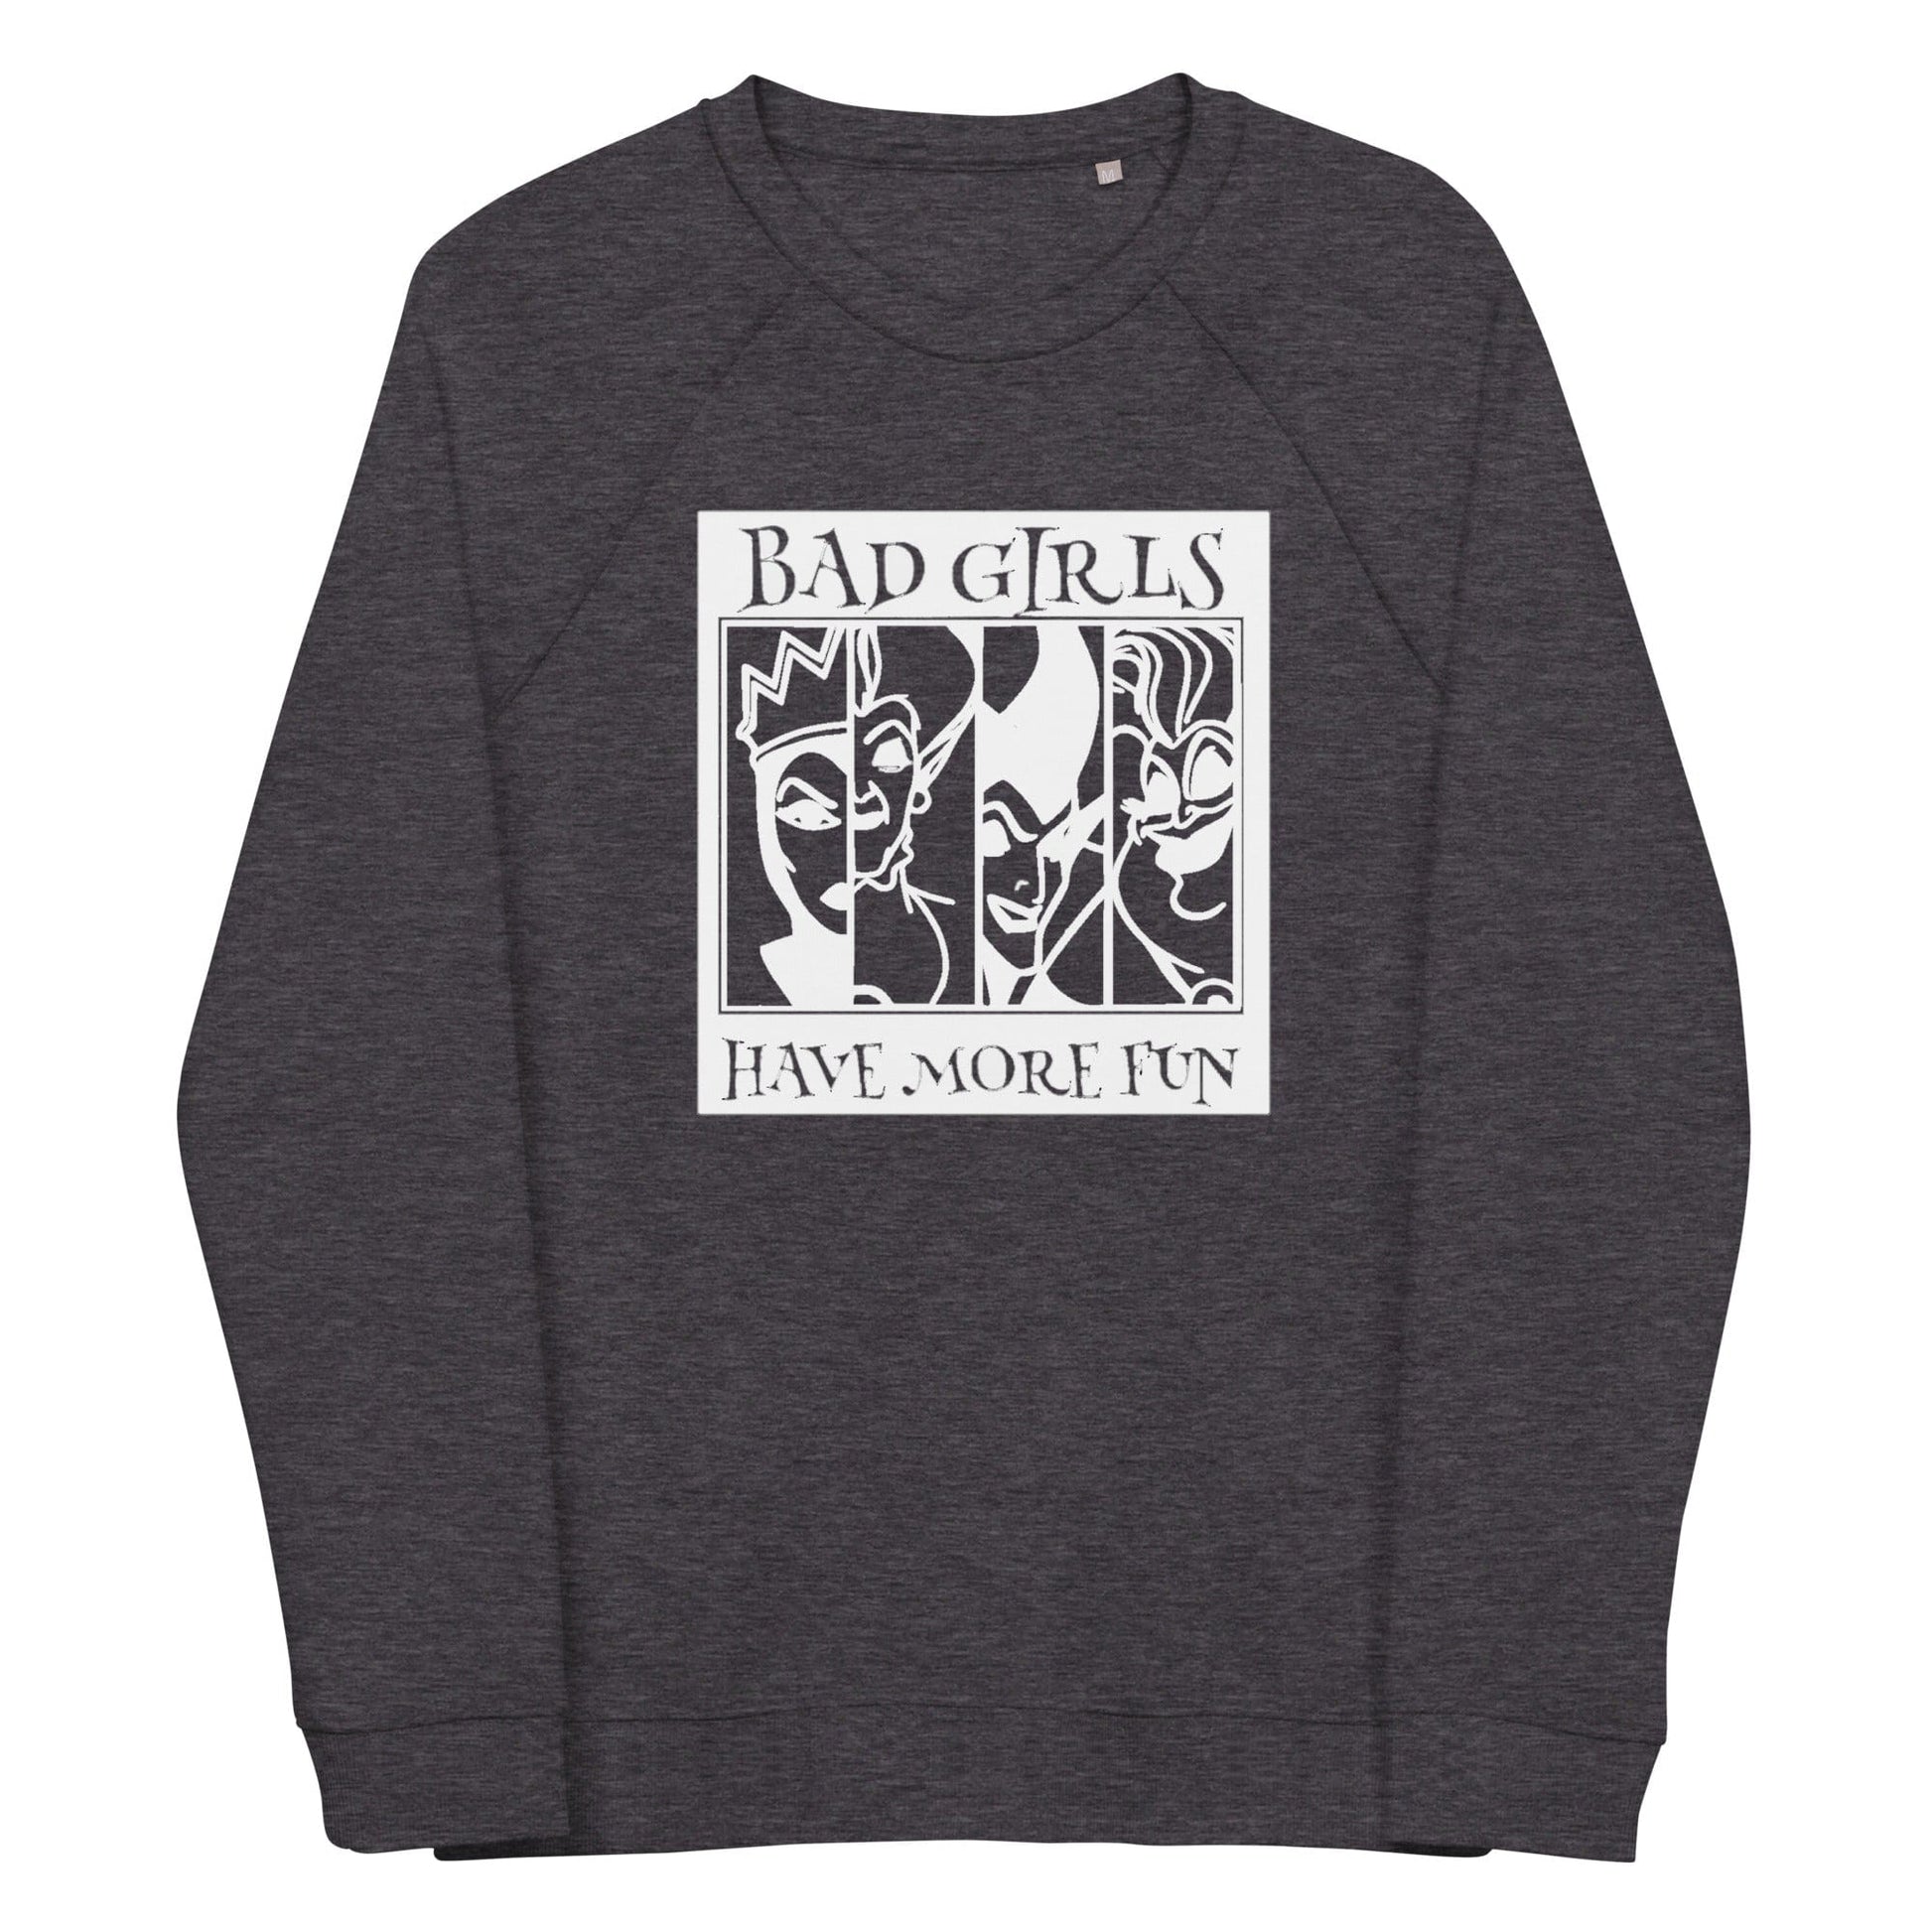 InsensitiviTees Shirts S / Dark Gray Bad Girls Have More Fun Sweatshirt